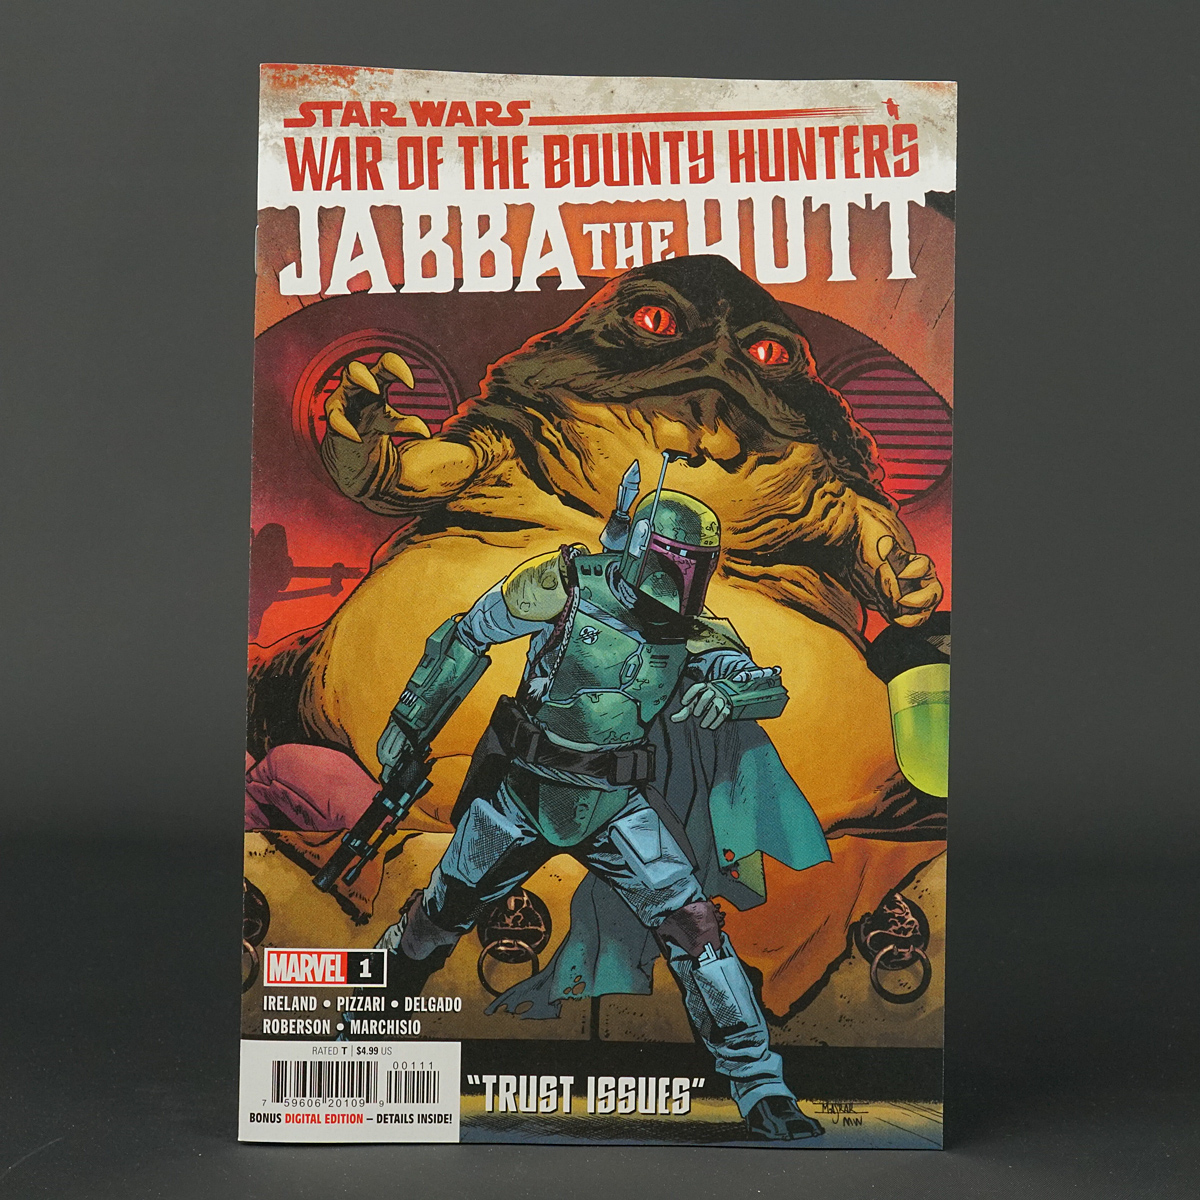 STAR WARS JABBA THE HUTT #1 Marvel Comics 2021 MAY210675 (CA) Asrar (W) Ireland